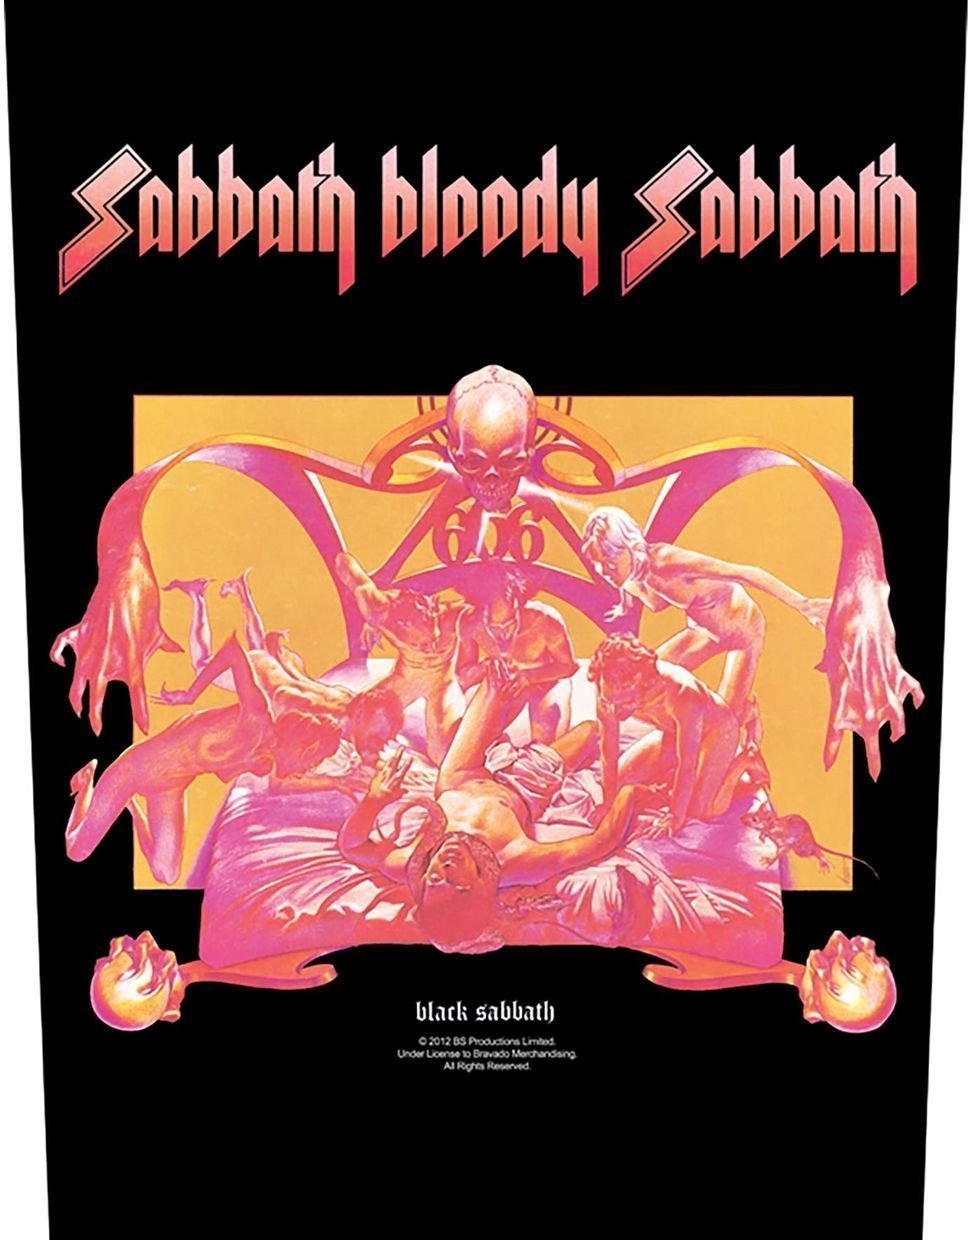 Zakrpa Black Sabbath Sabbath Bloody Sabbath Zakrpa